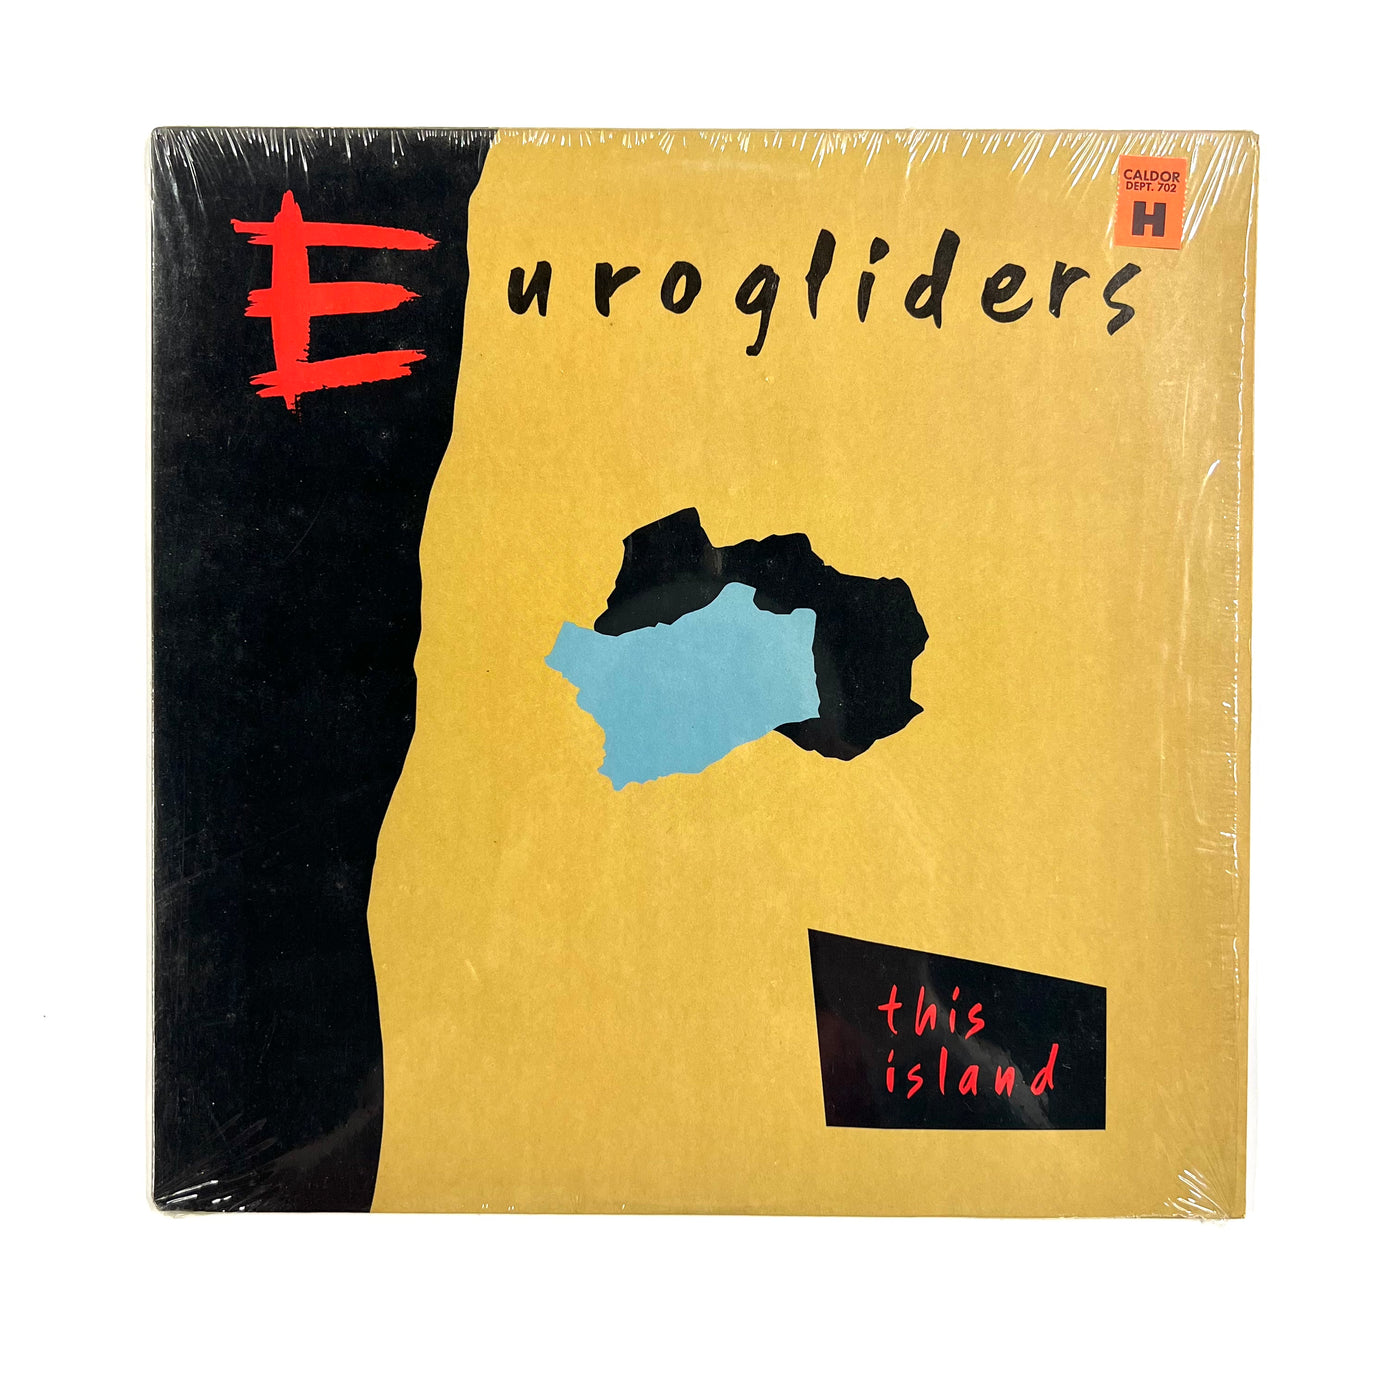 Eurogliders - This Island